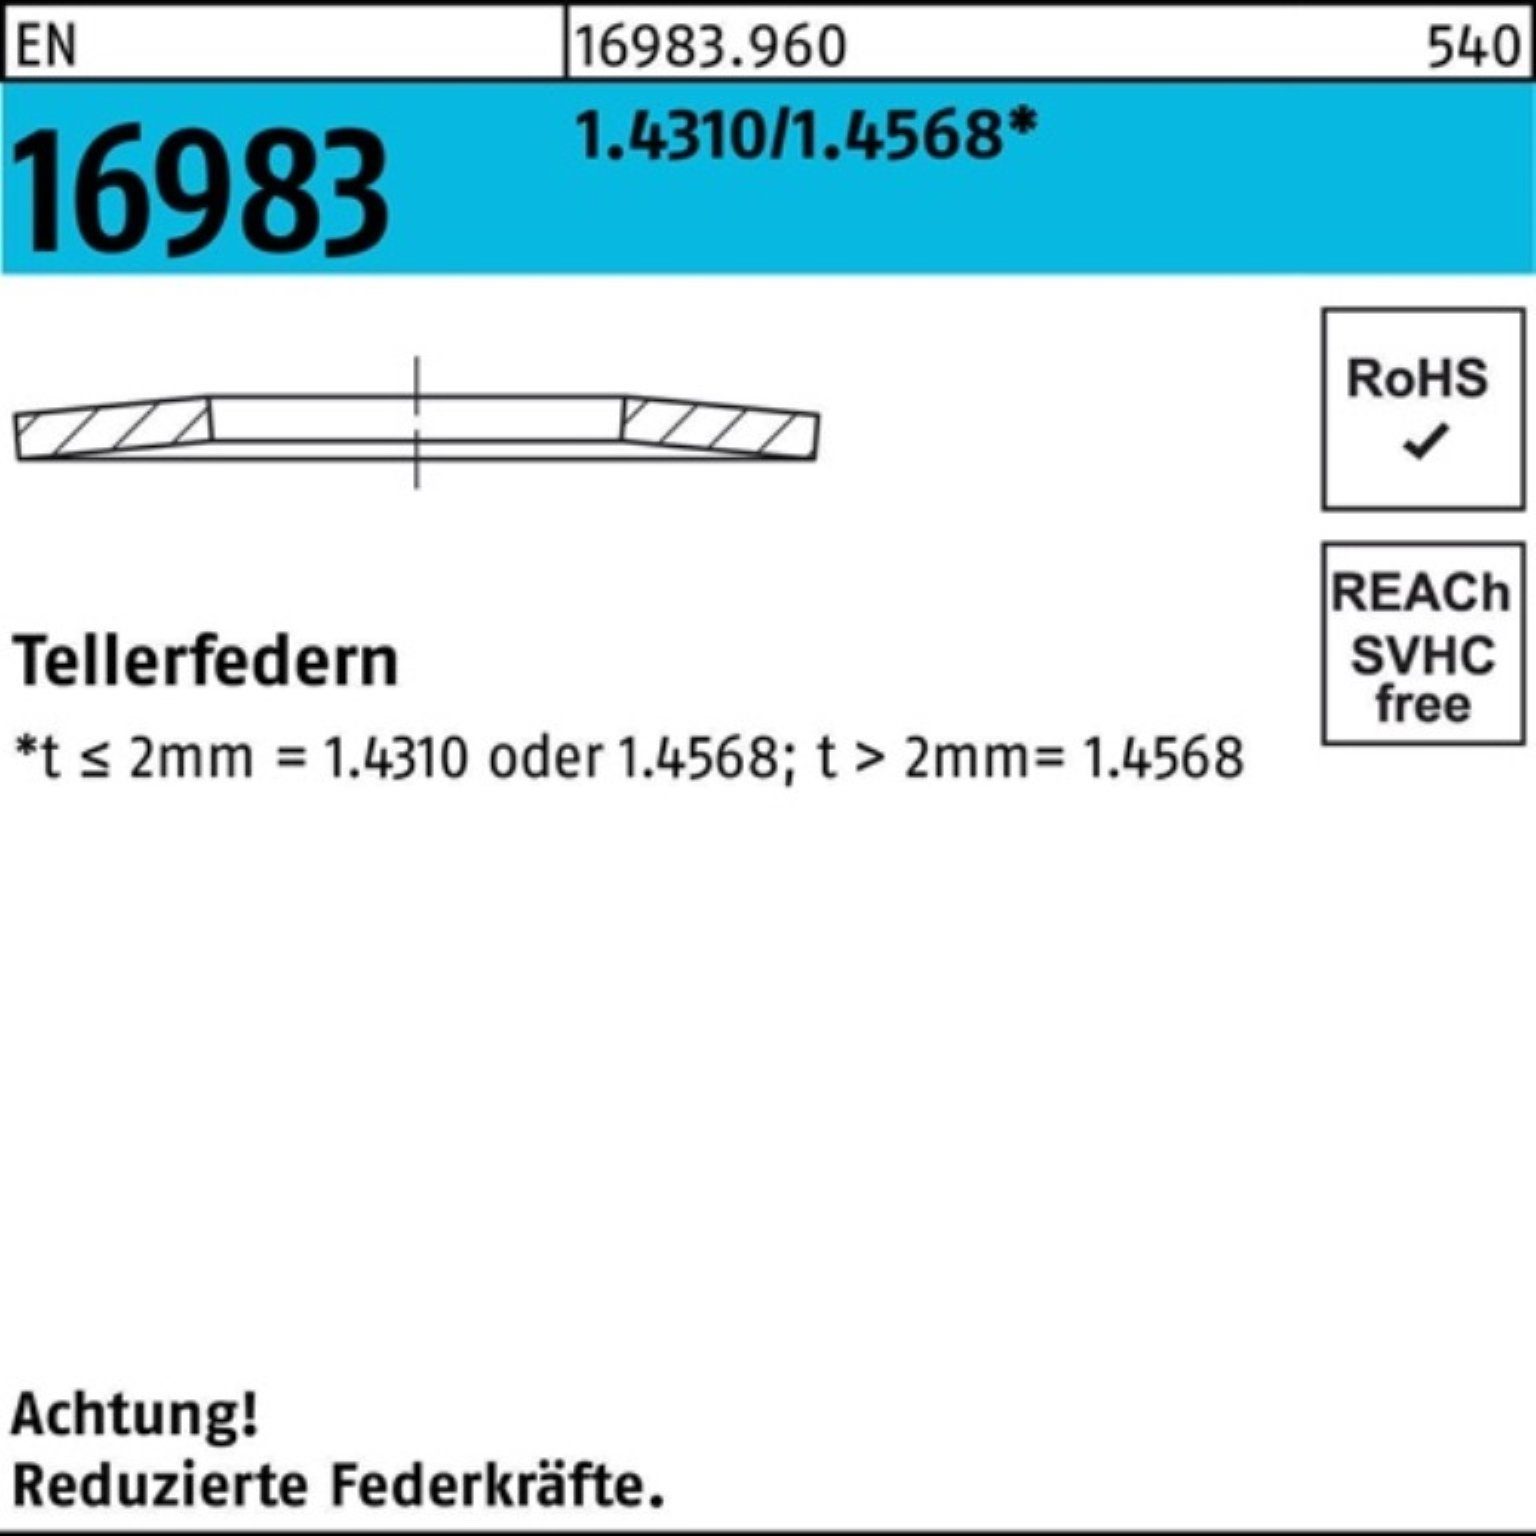 Tellerfeder 200er 1.4310/1.4568 Tellerfeder Reyher 31,5x16,3x1,25 Pack EN Stüc 200 16983